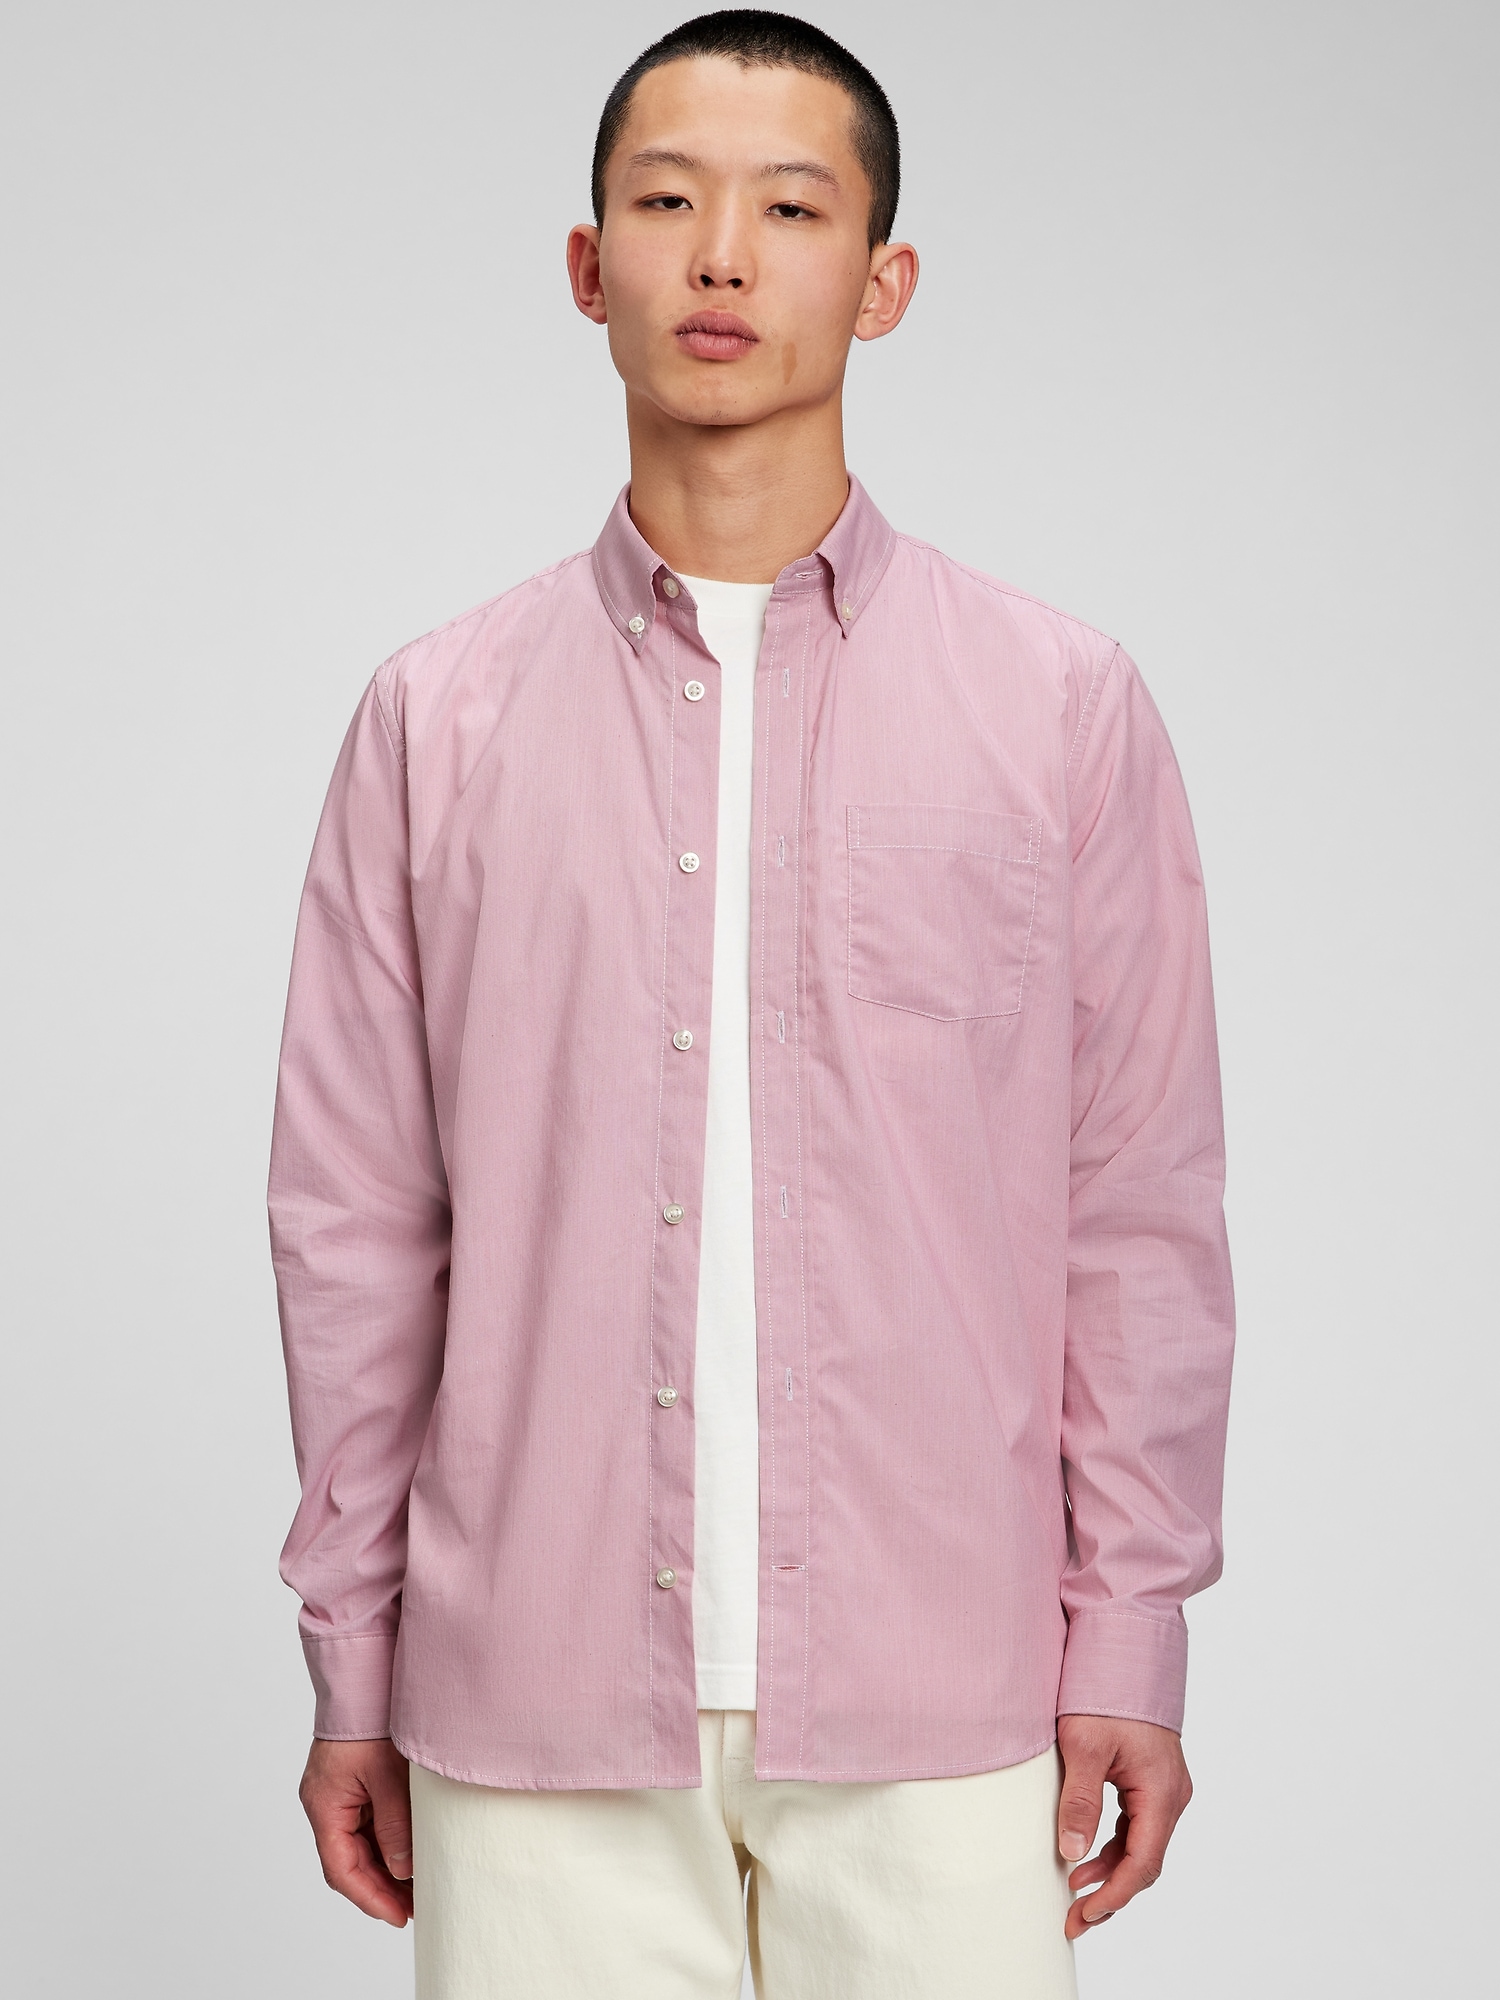 Gap All-day Poplin Shirt In Standard Fit In Pink Standard